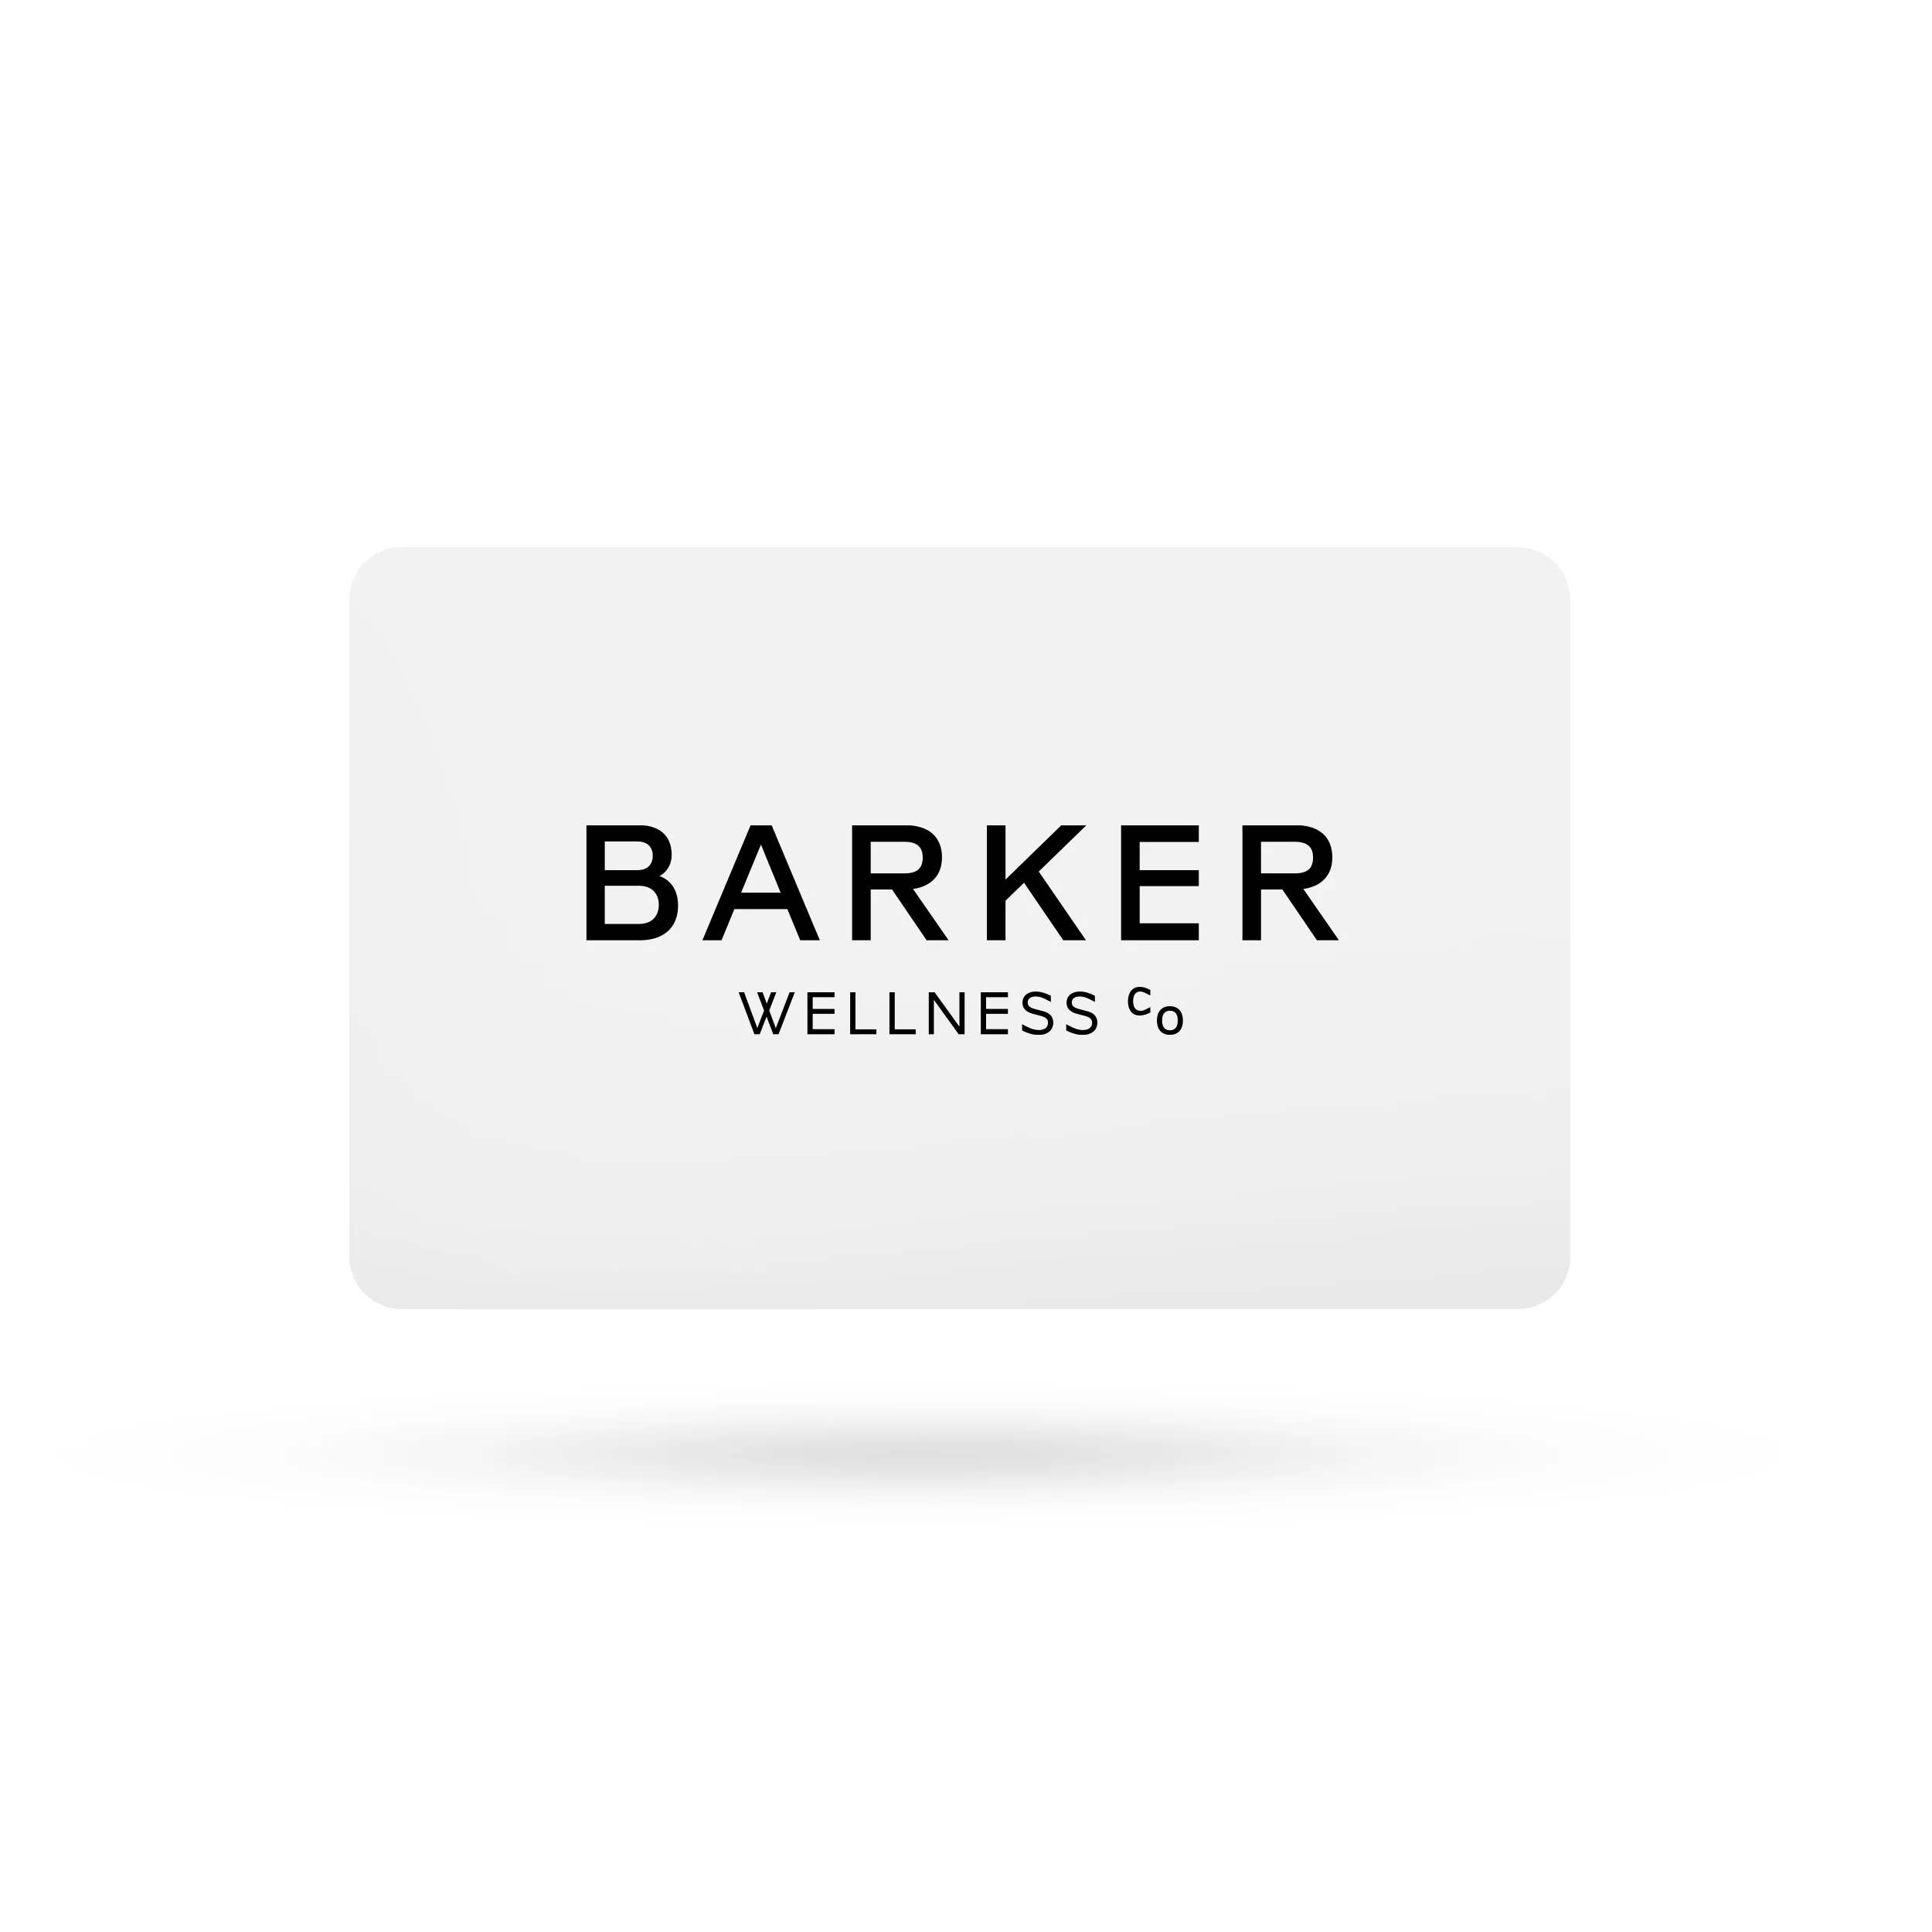 Barker Wellness Co Coupon